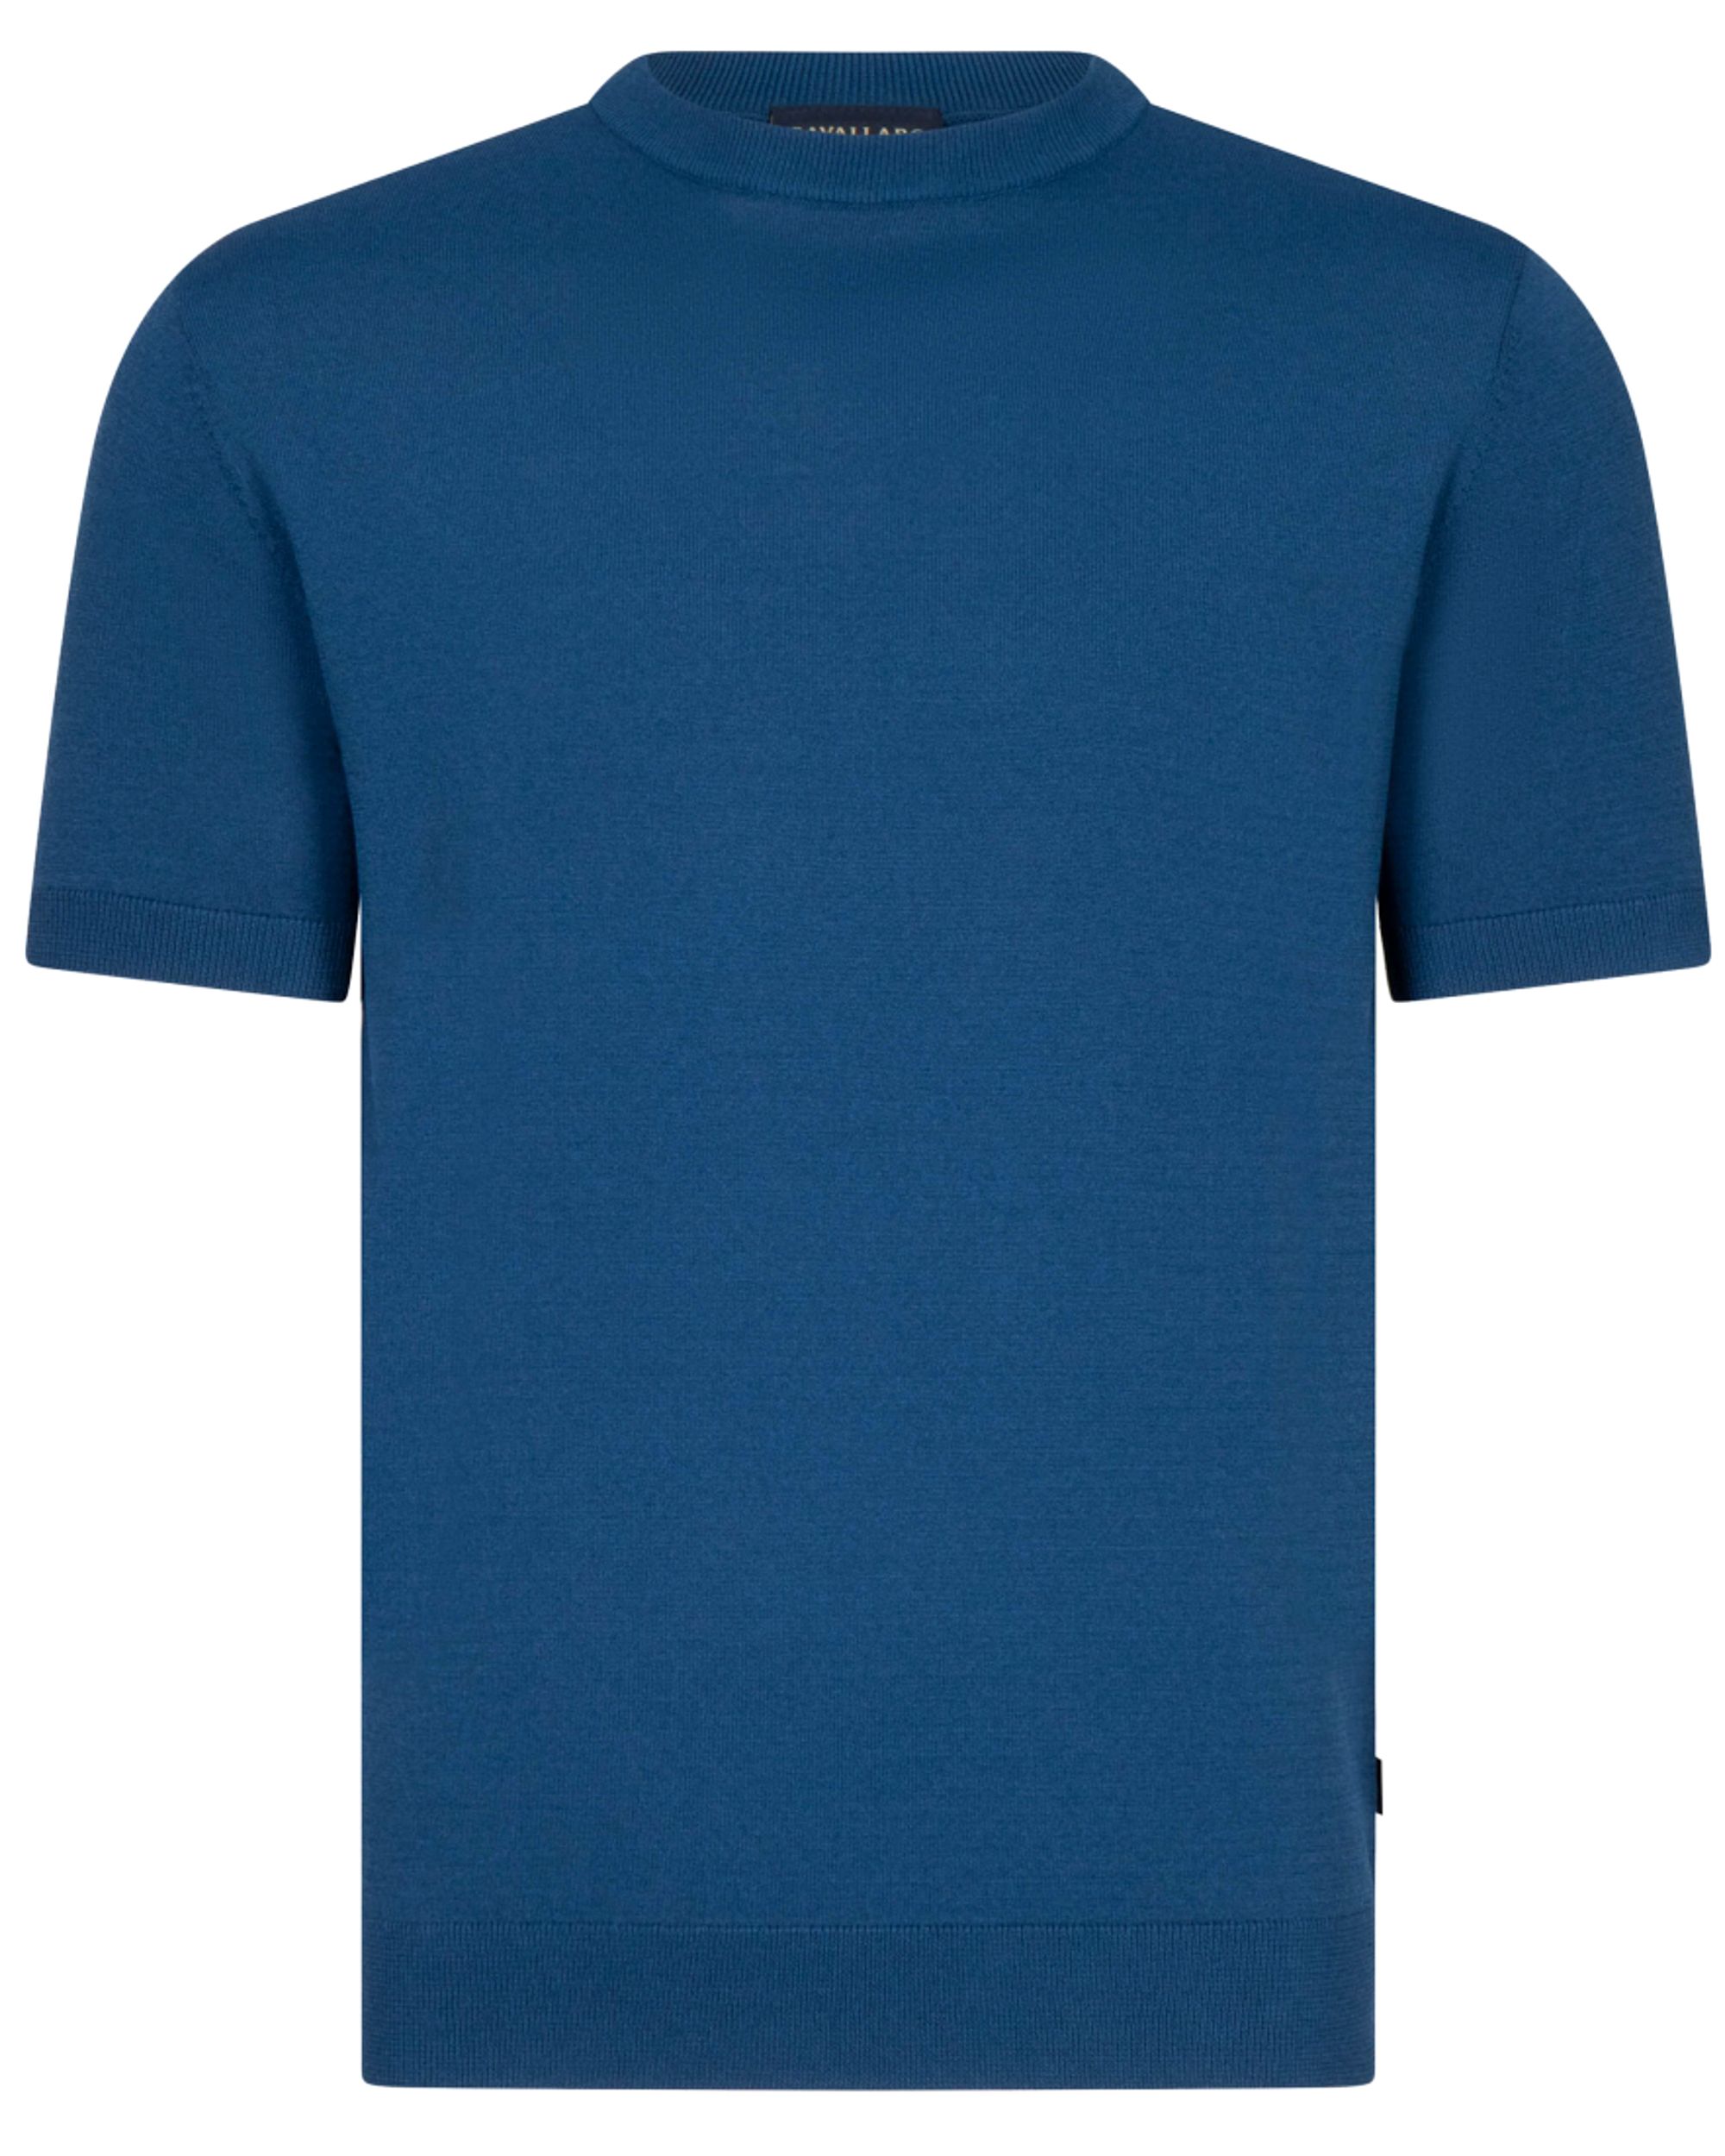 Cavallaro Milo T-shirt KM Blauw 094416-001-L